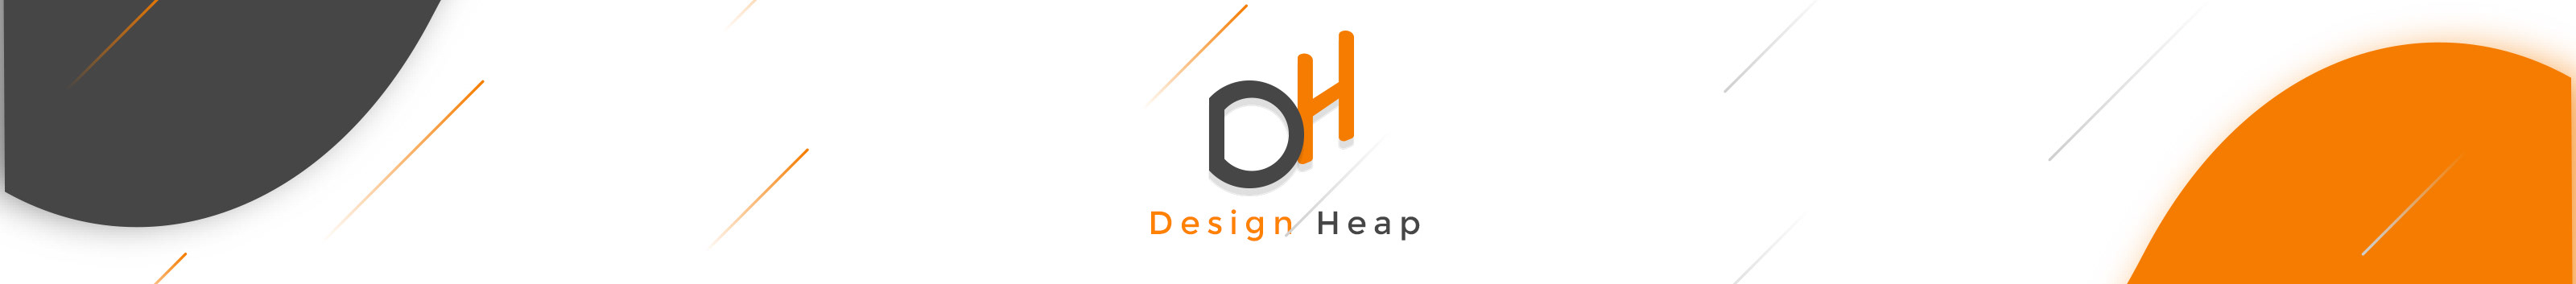 Design Heap profil başlığı